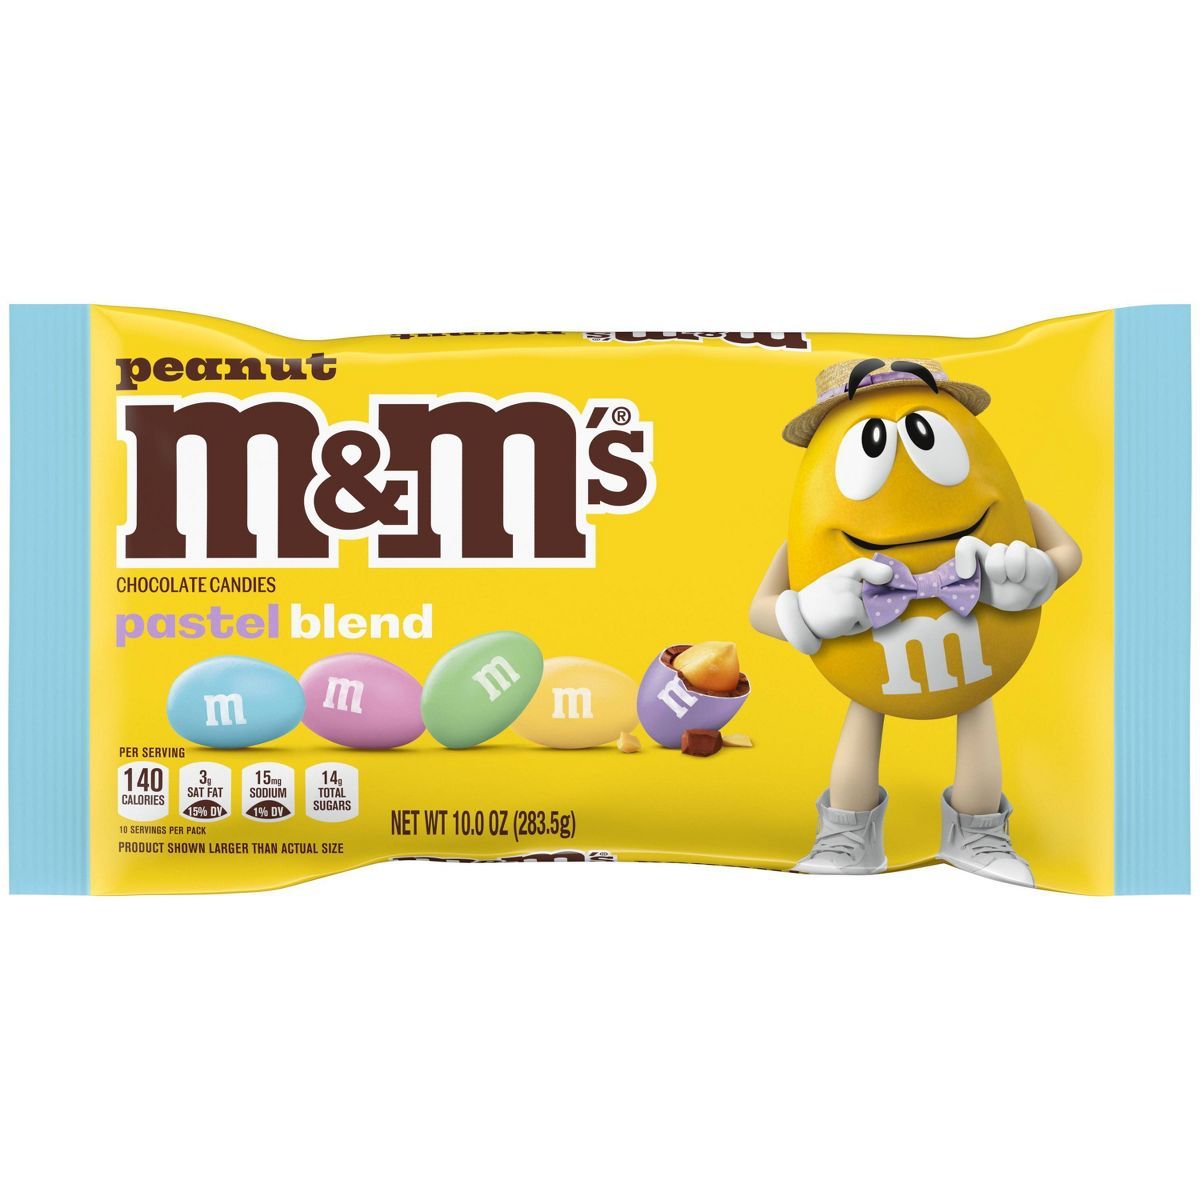 M&M's Easter Peanut Chocolate Candies - 10oz | Target